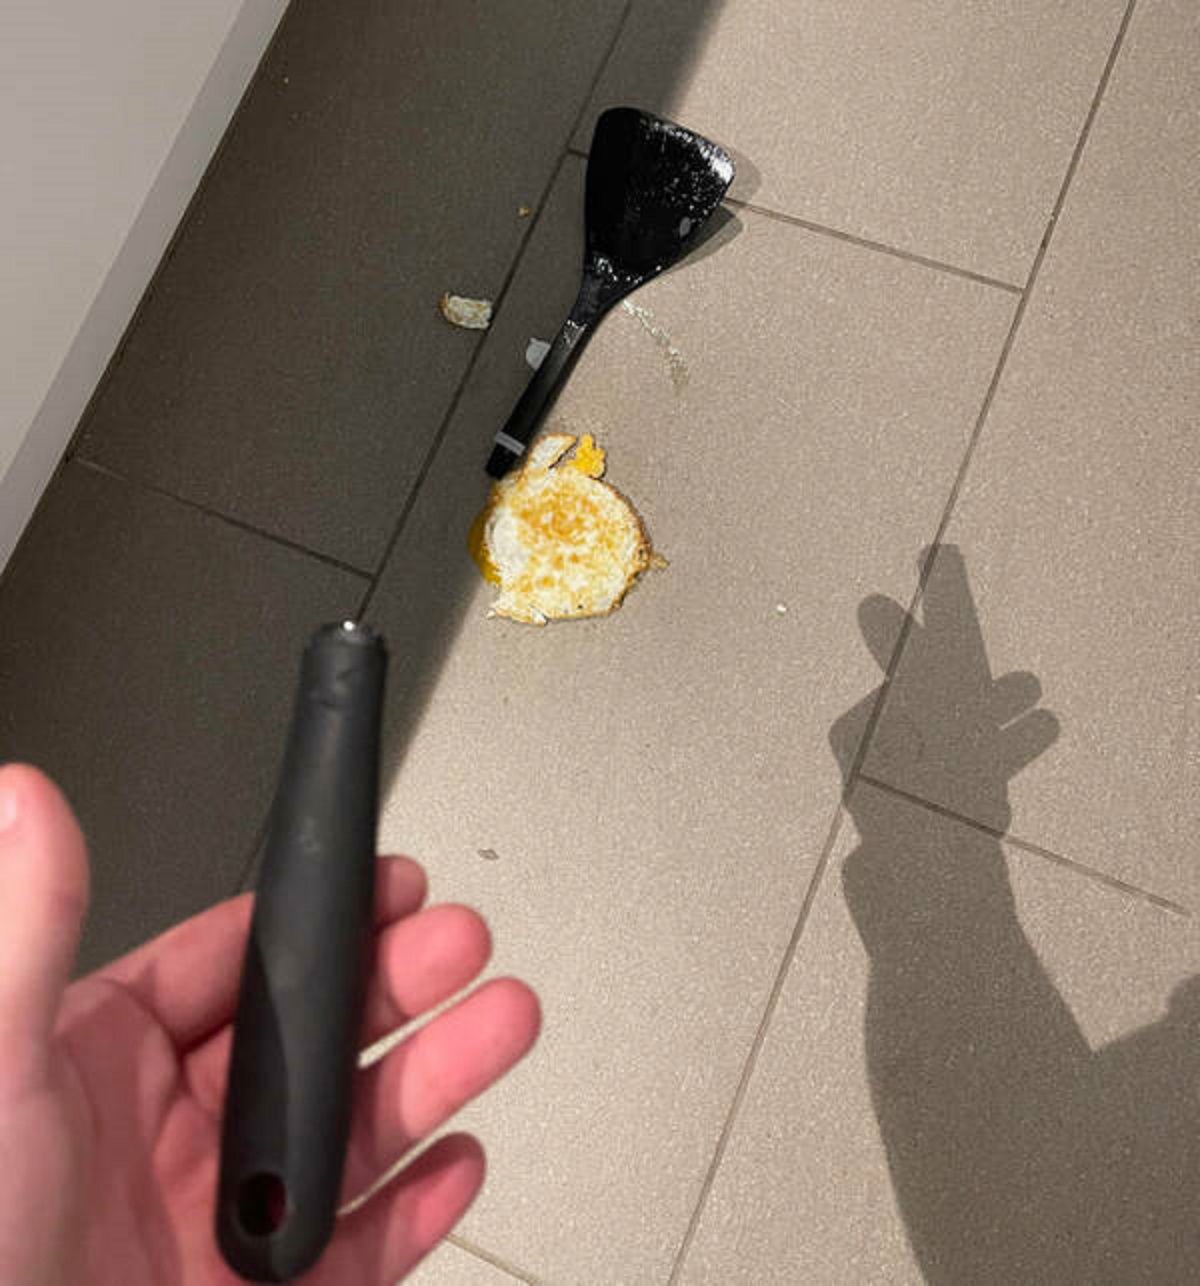 “My spatula broke making eggs this morning.”